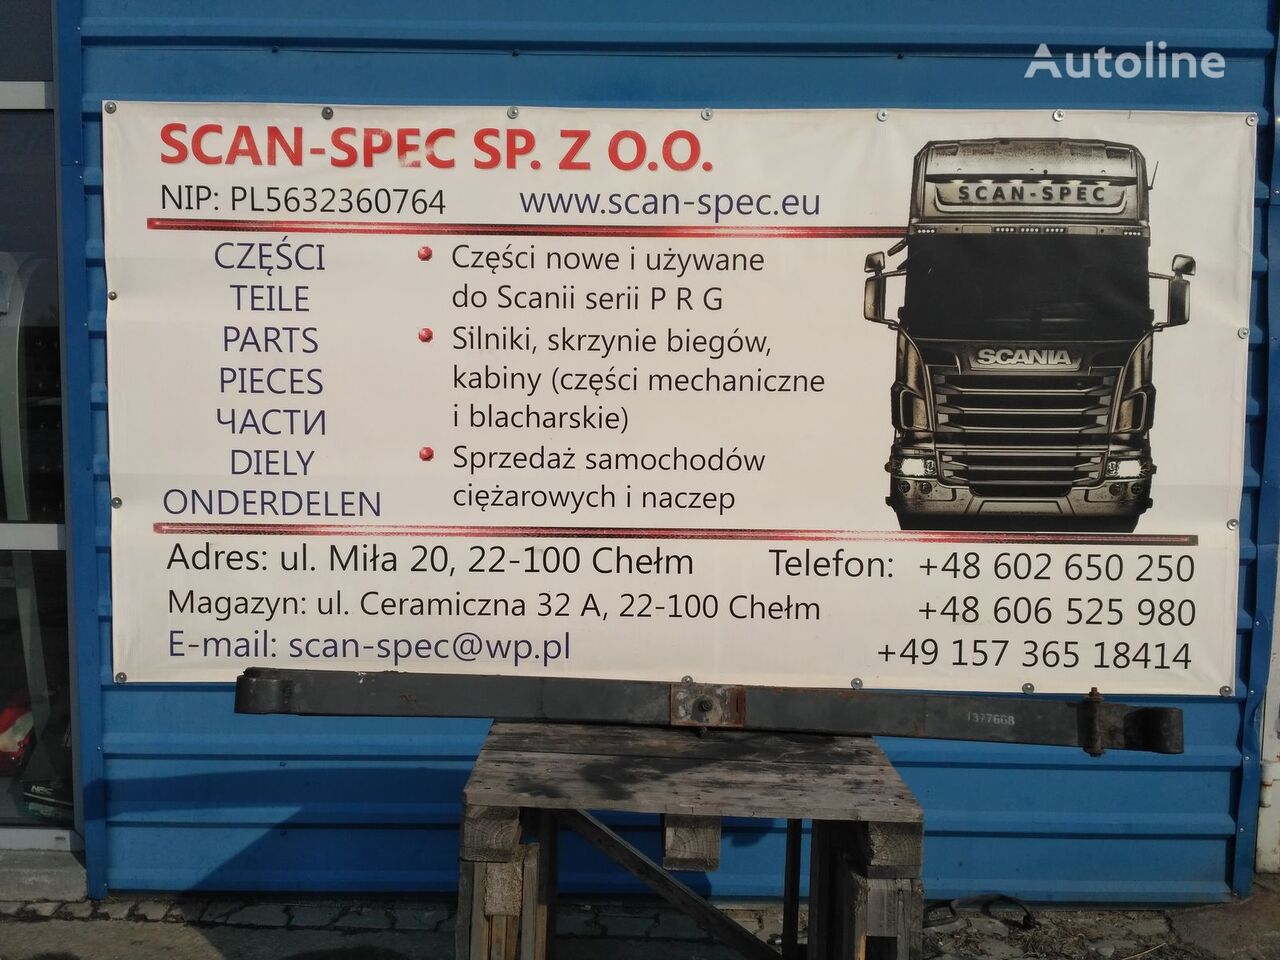 Scania Przedni 1377668, 1312992 leaf spring for Scania P R G T truck tractor